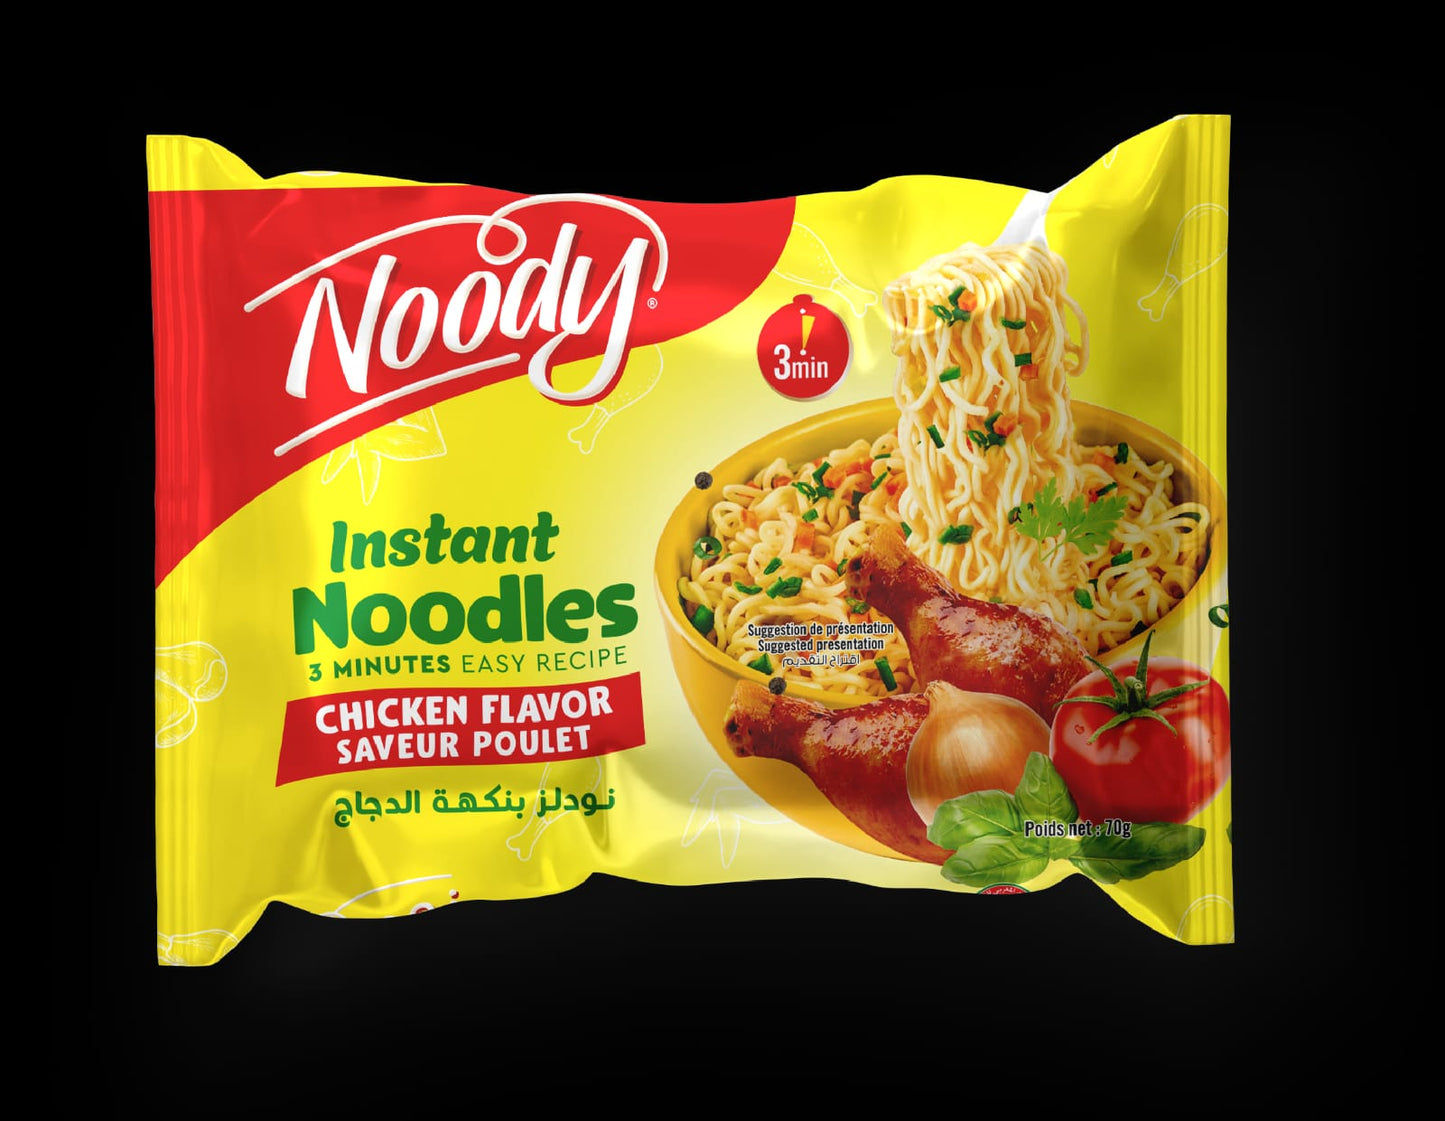 Noody Halal Instant Noodles Chicken 5x70g